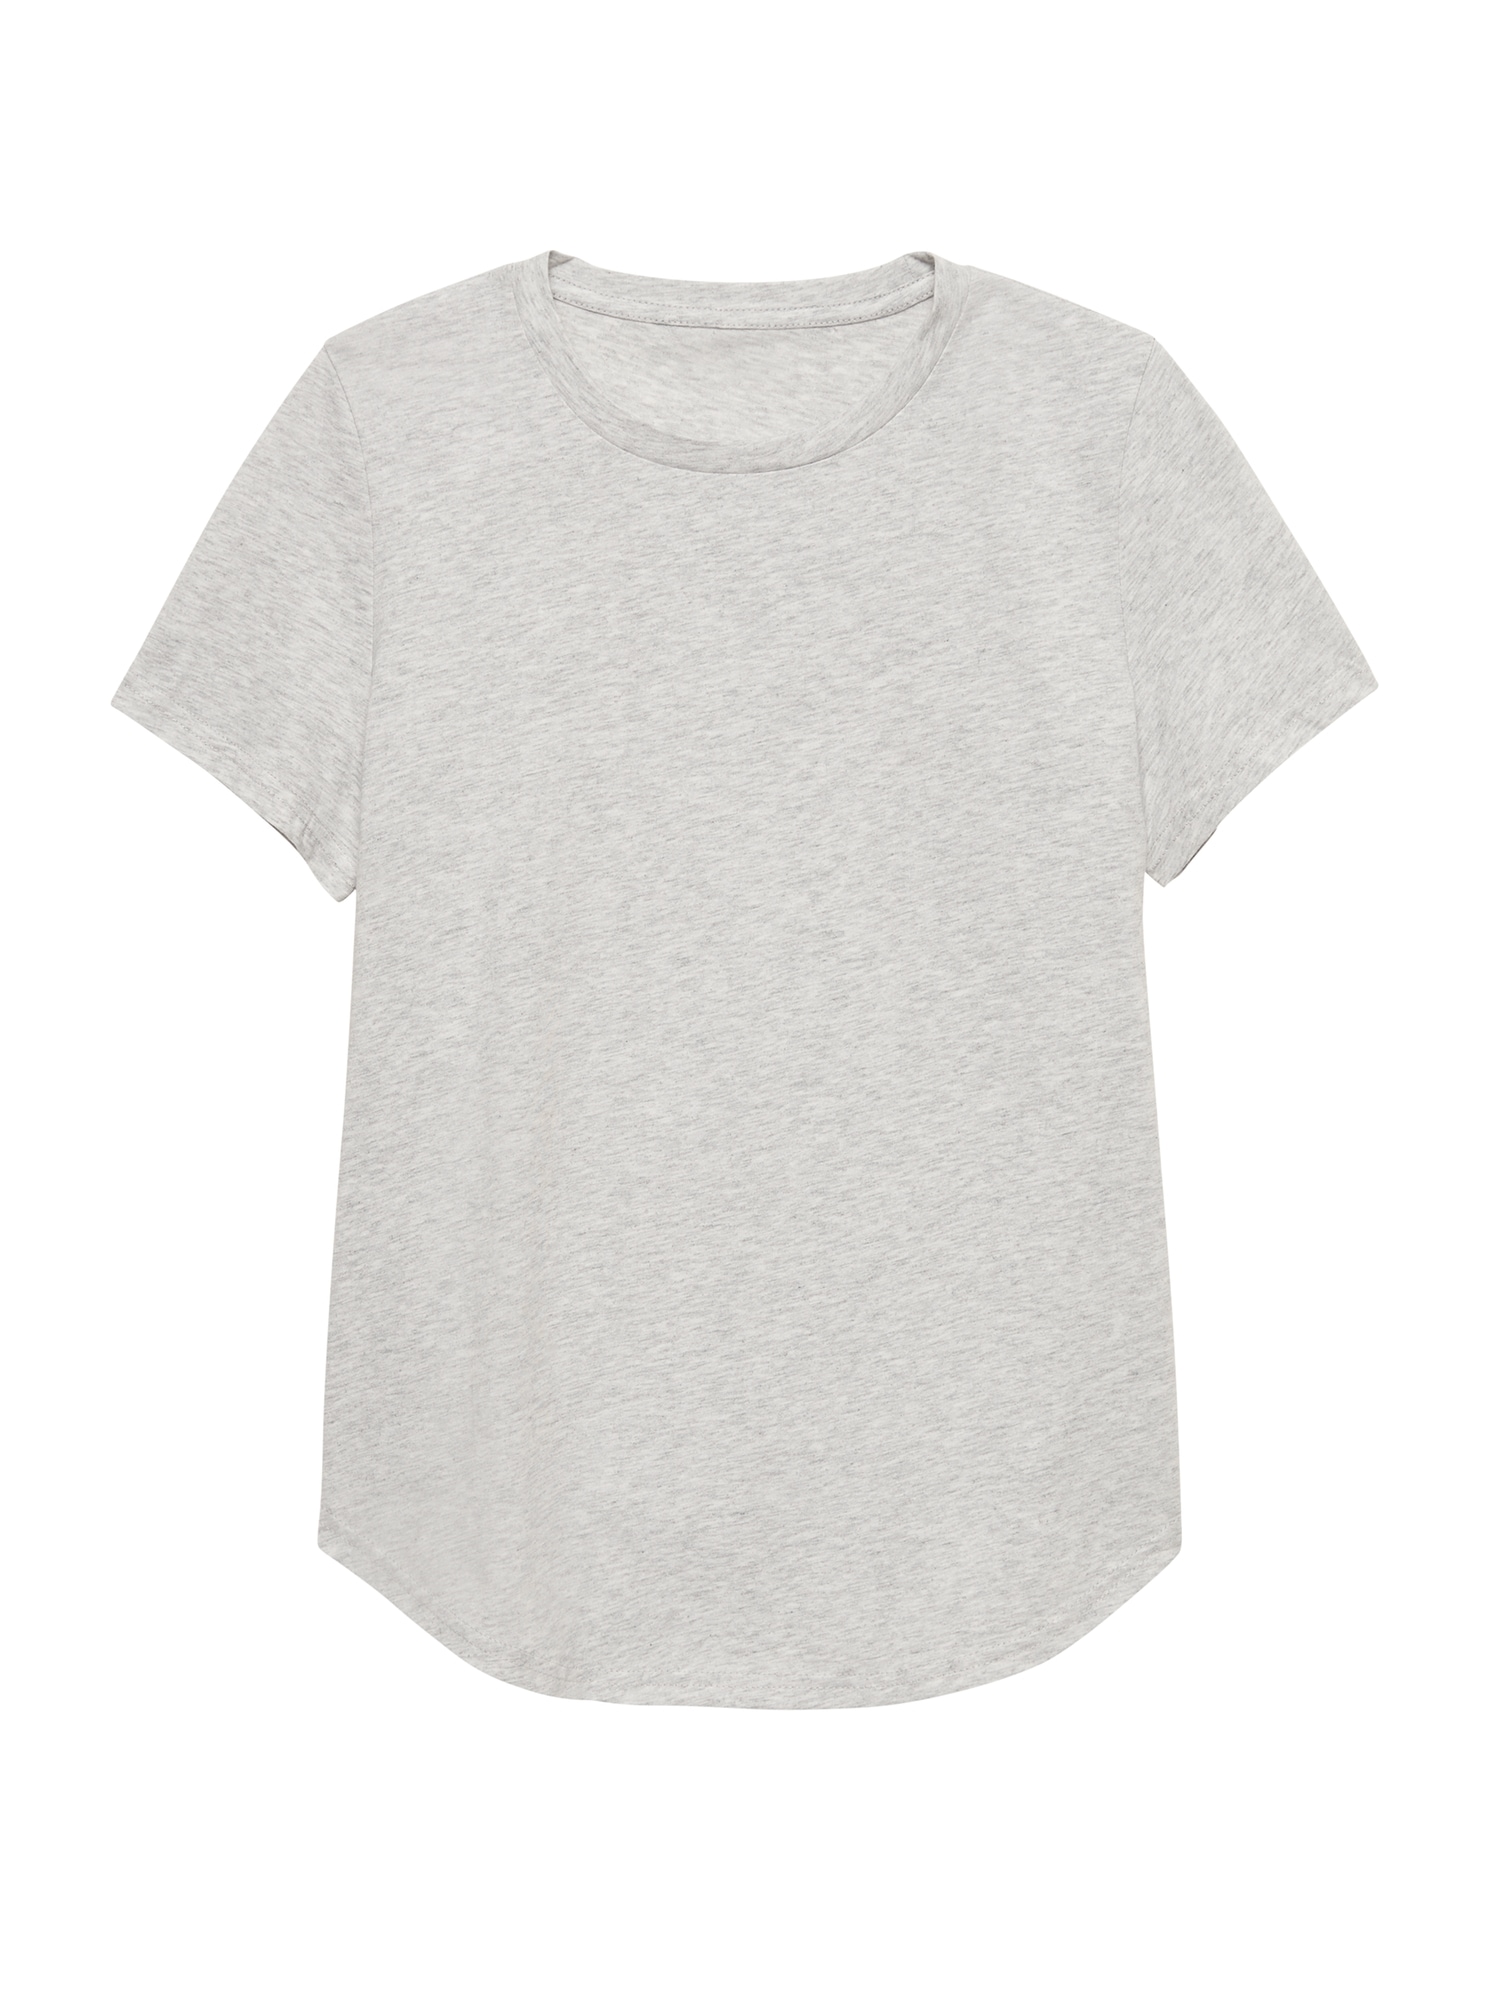 SUPIMA® Cotton Crew-Neck T-Shirt